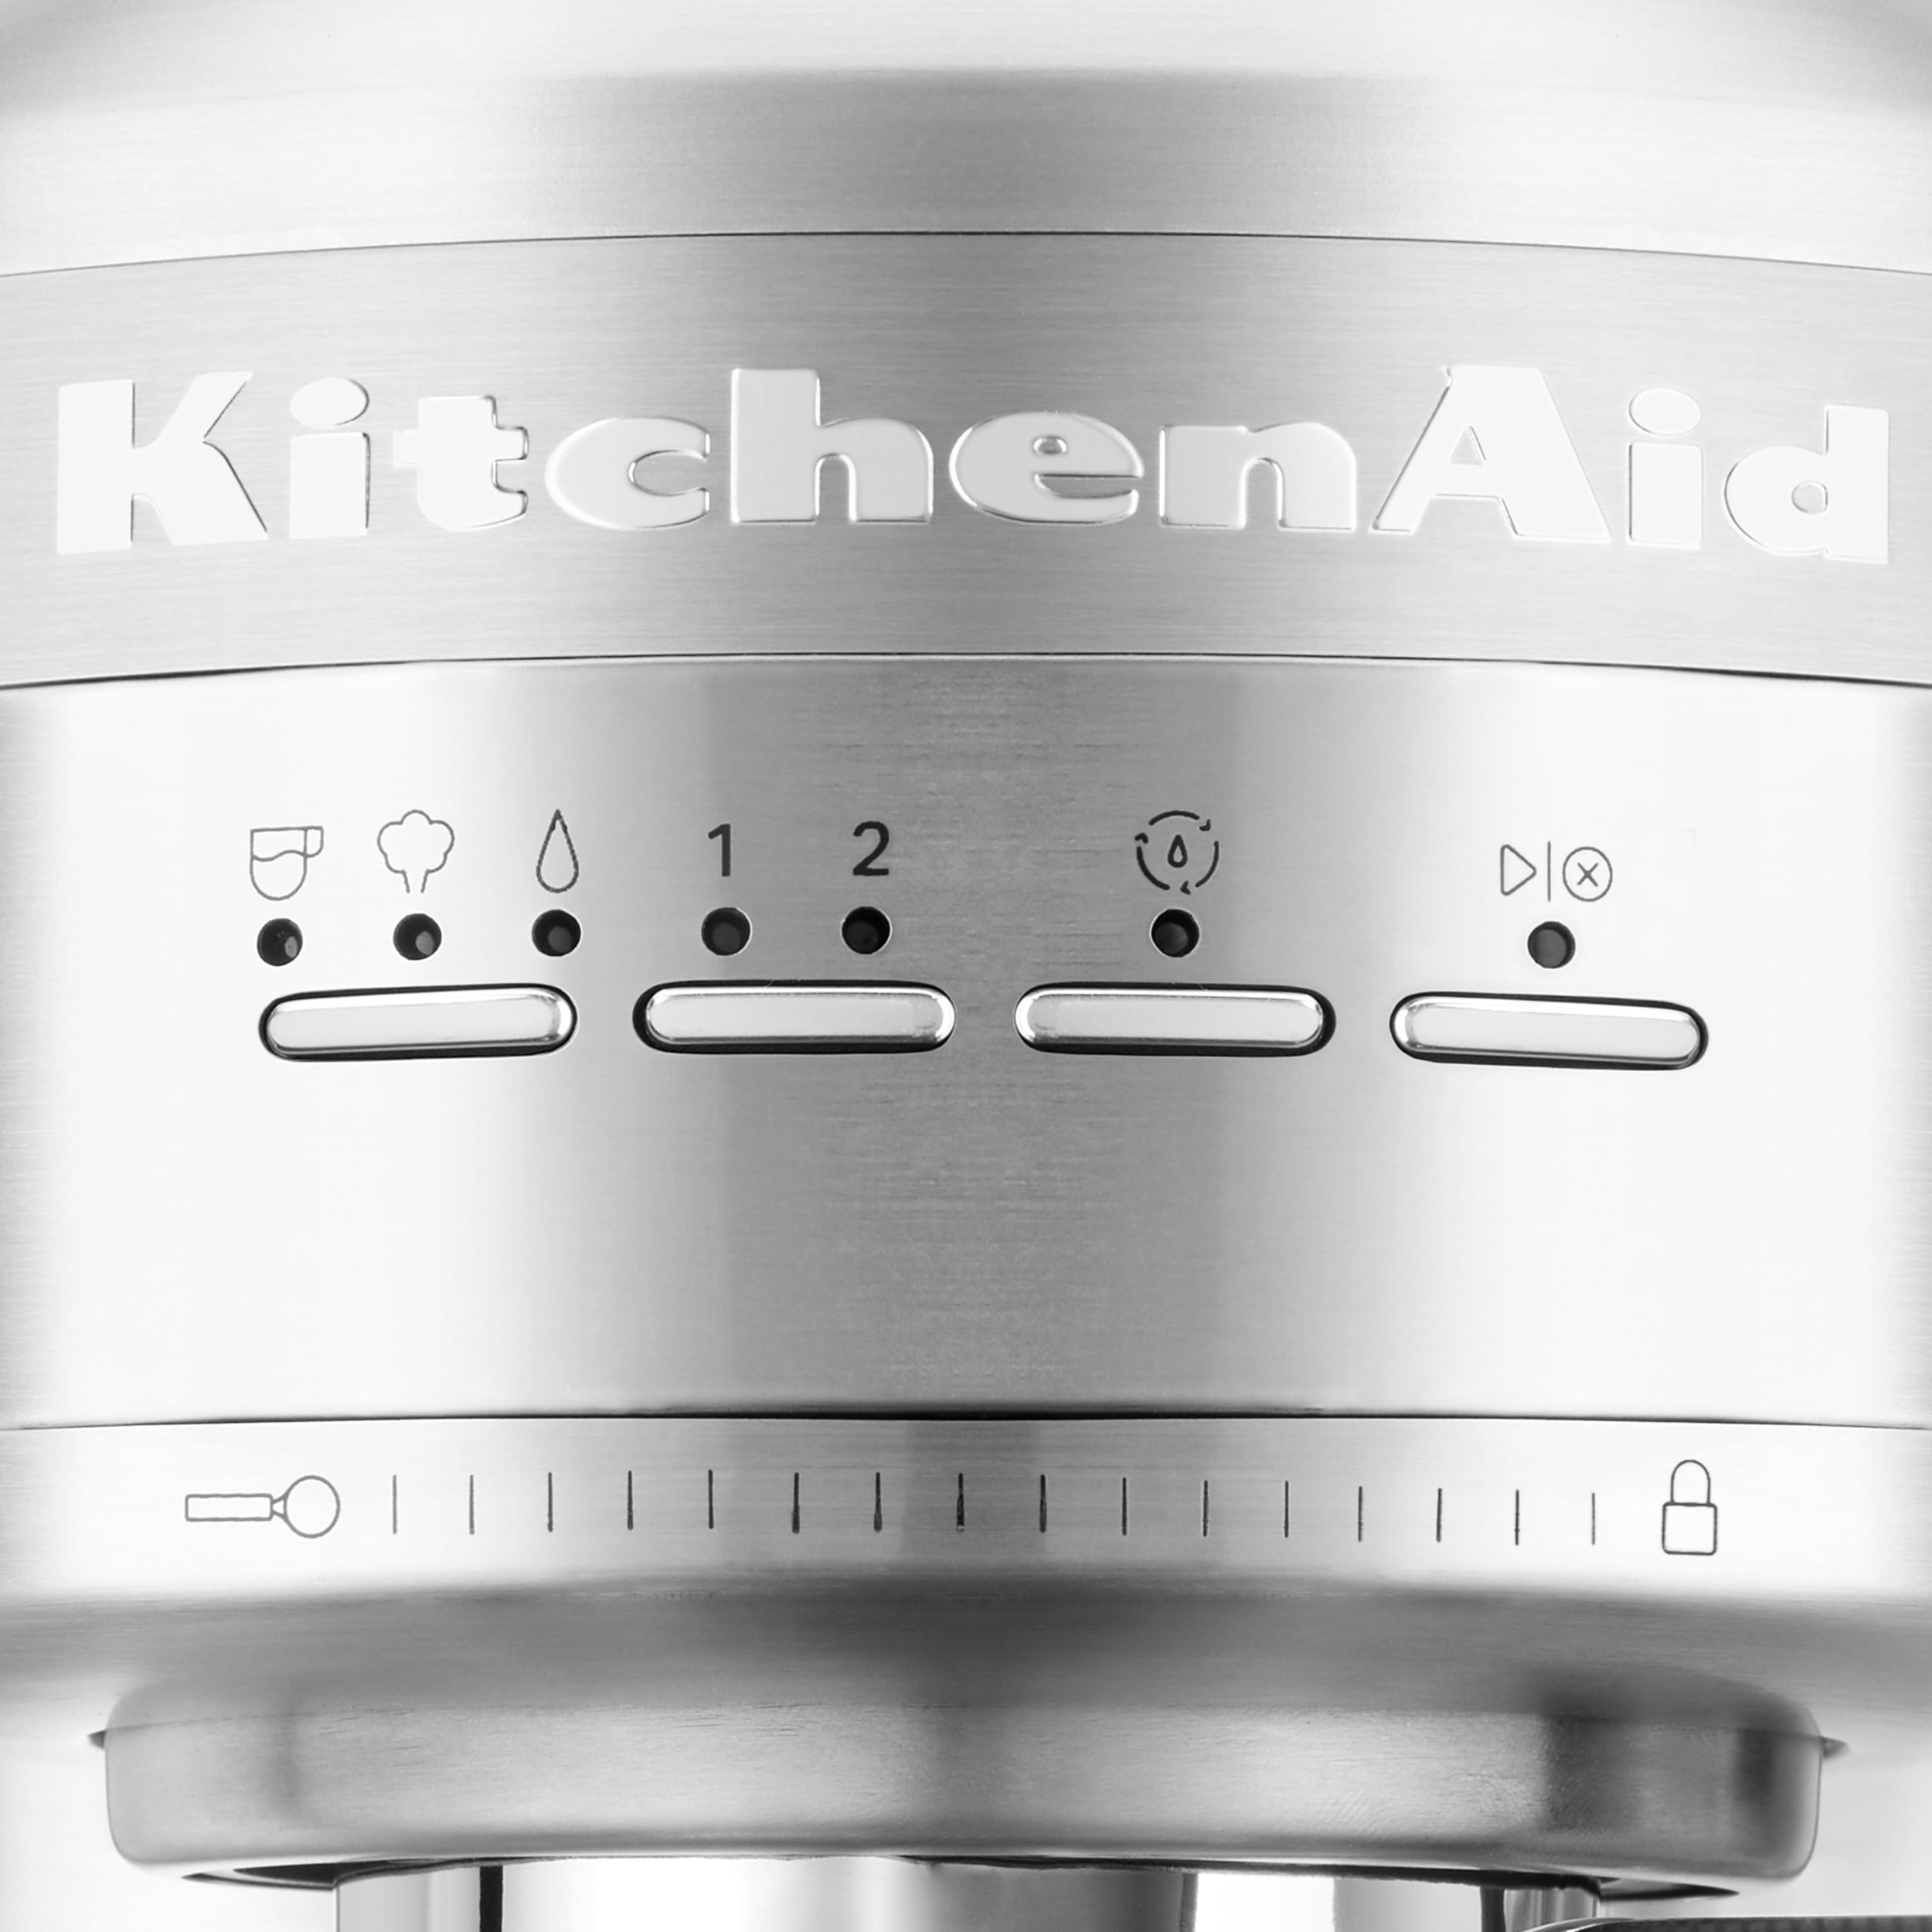 KitchenAid Metal Semi-Automatic Espresso Machine - KES6503 